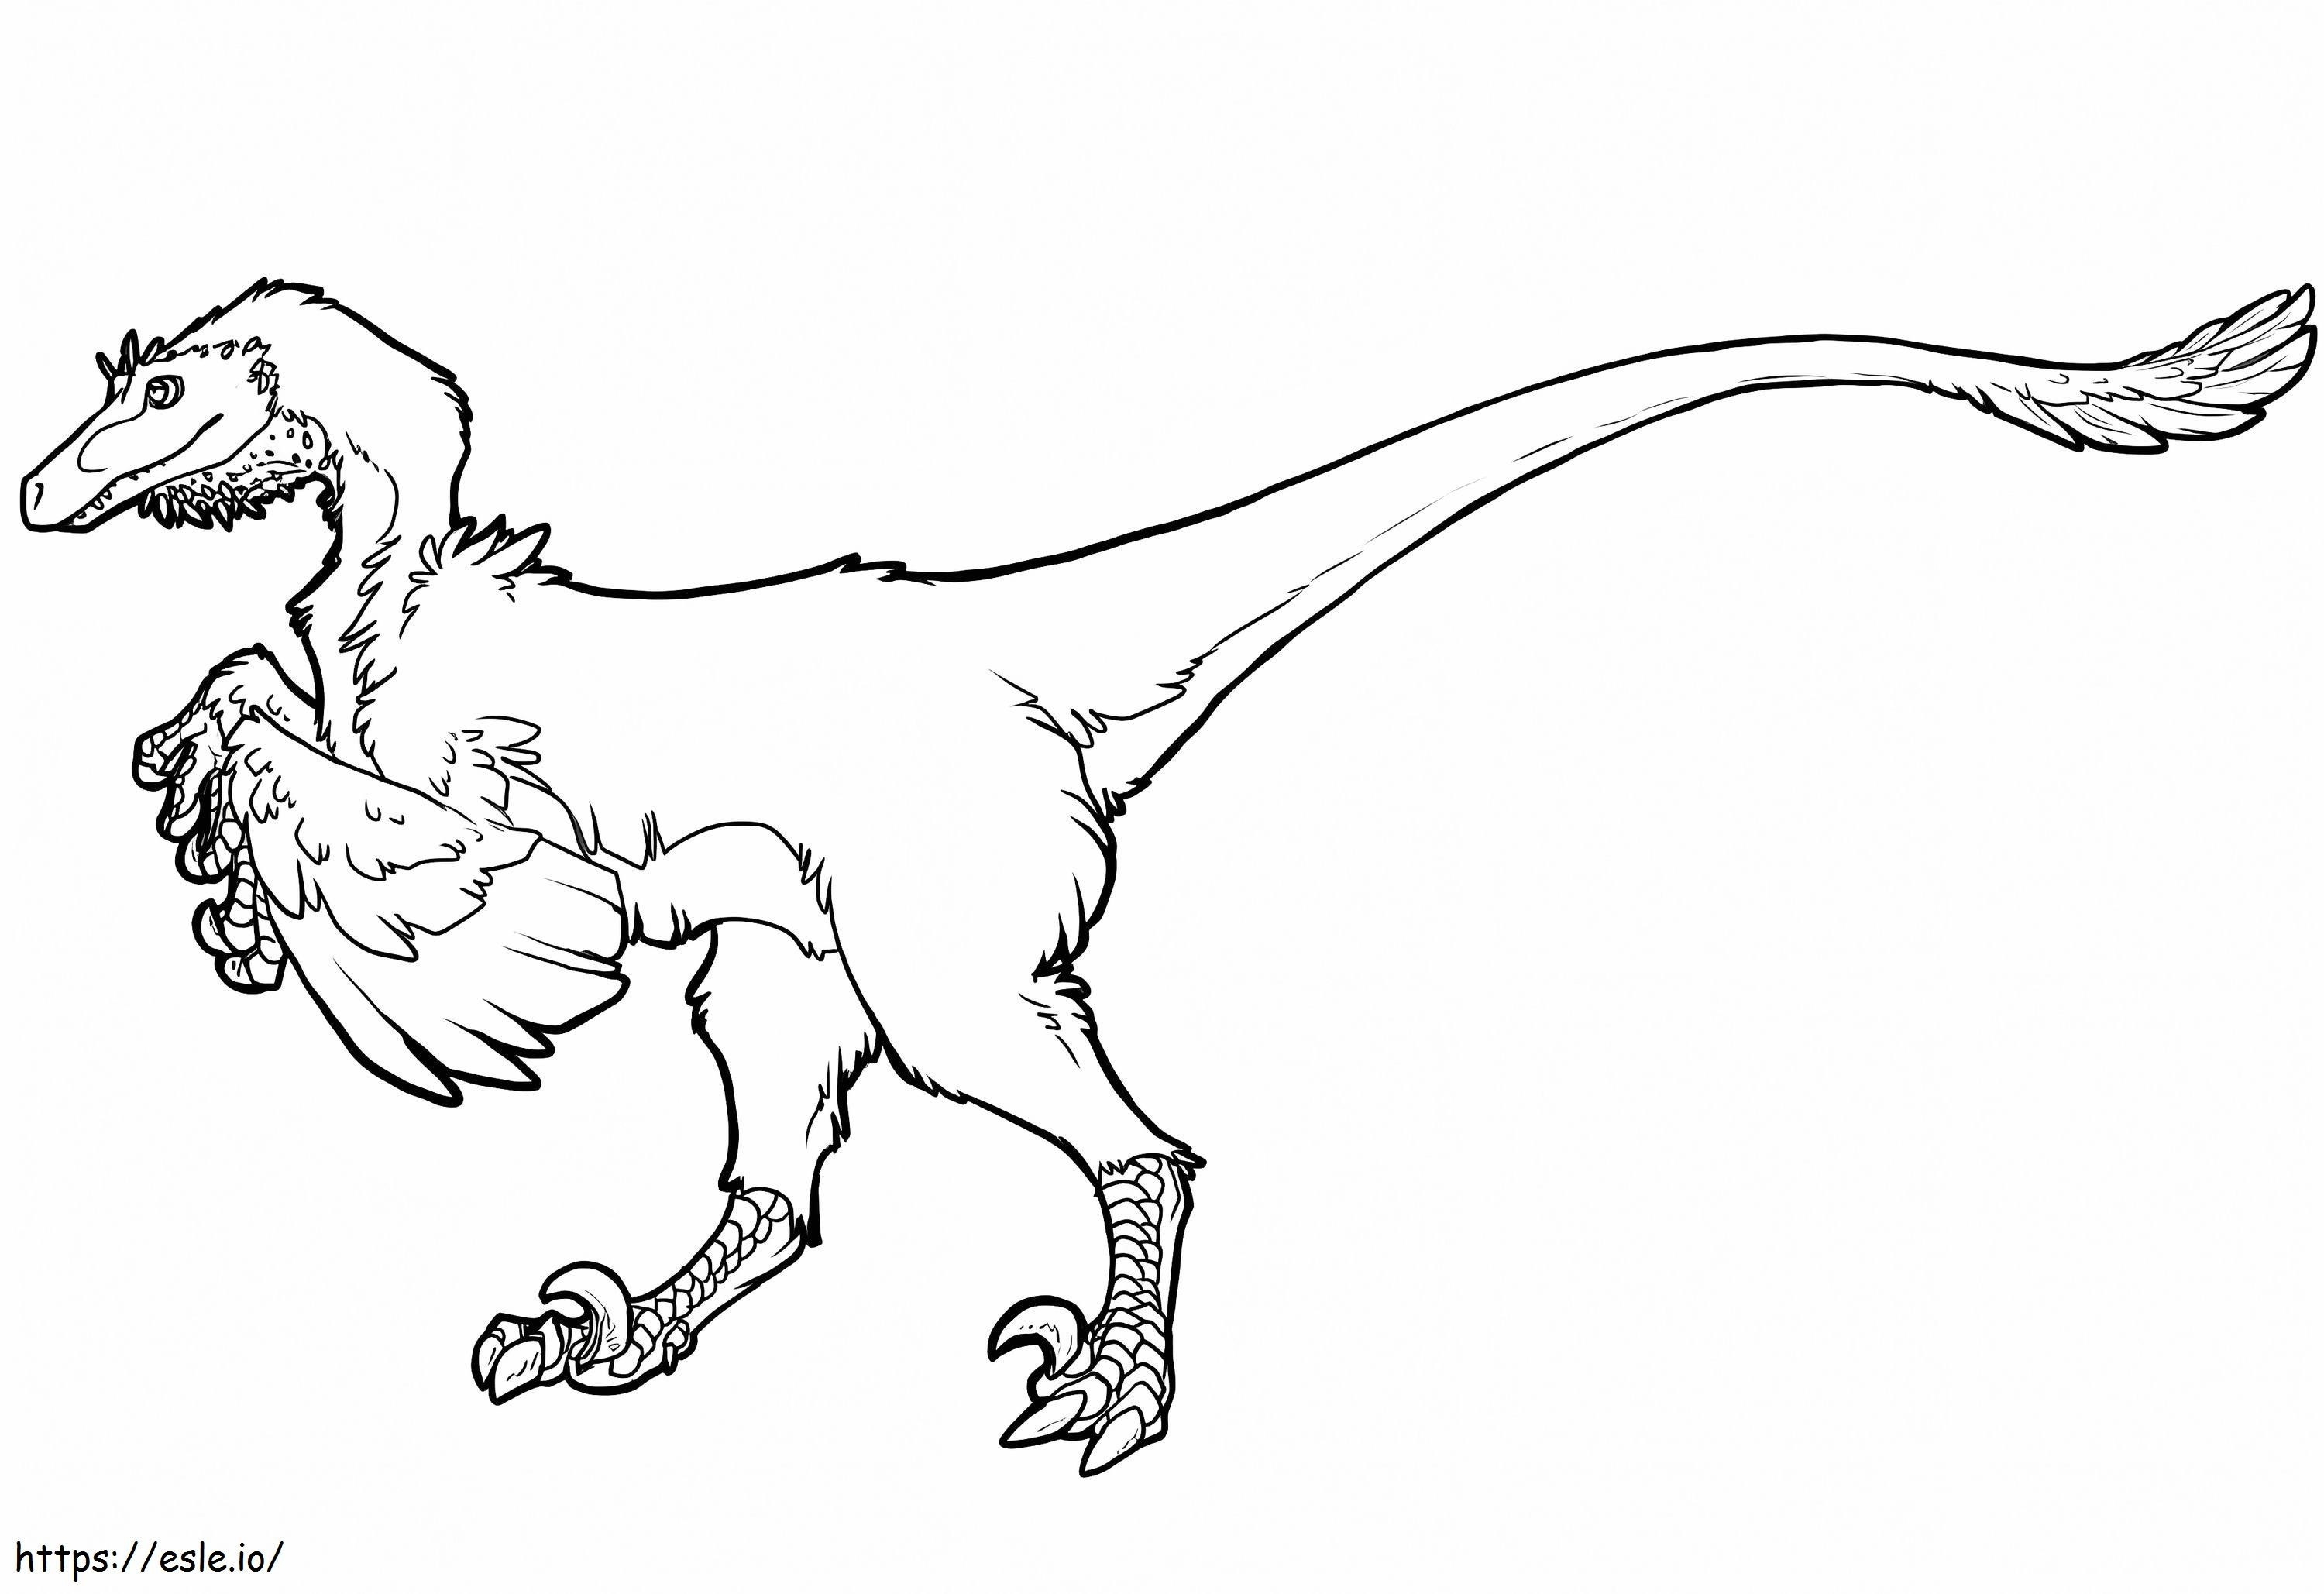 Dinossauro Velociraptor 1 para colorir